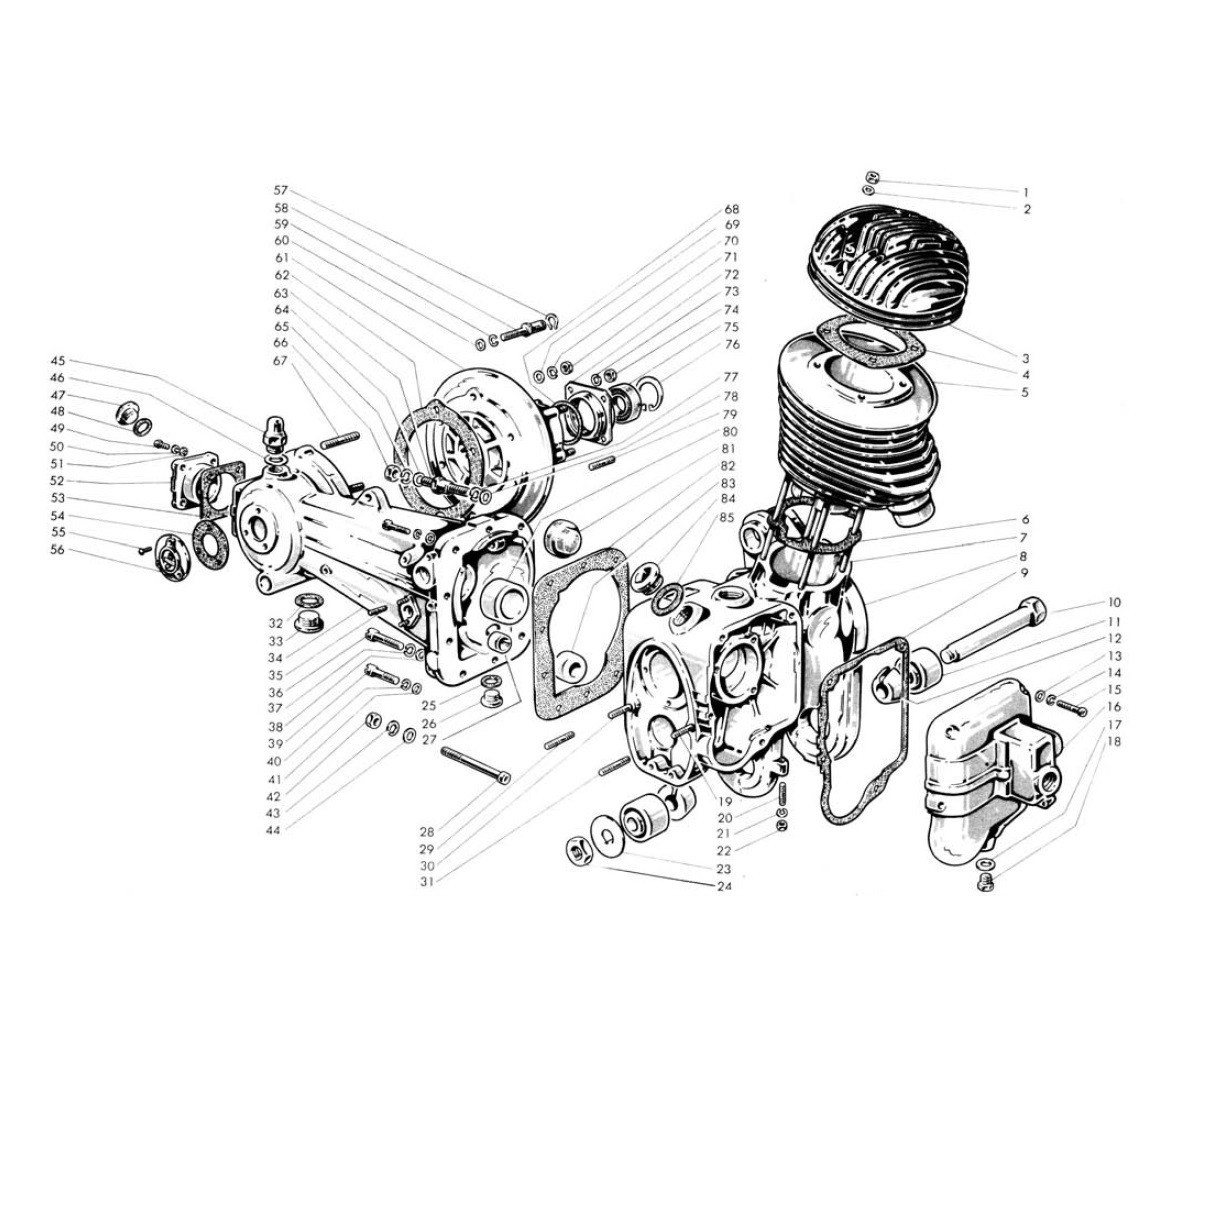 Carter motore, cilindro,trasmissione (Tav.1)